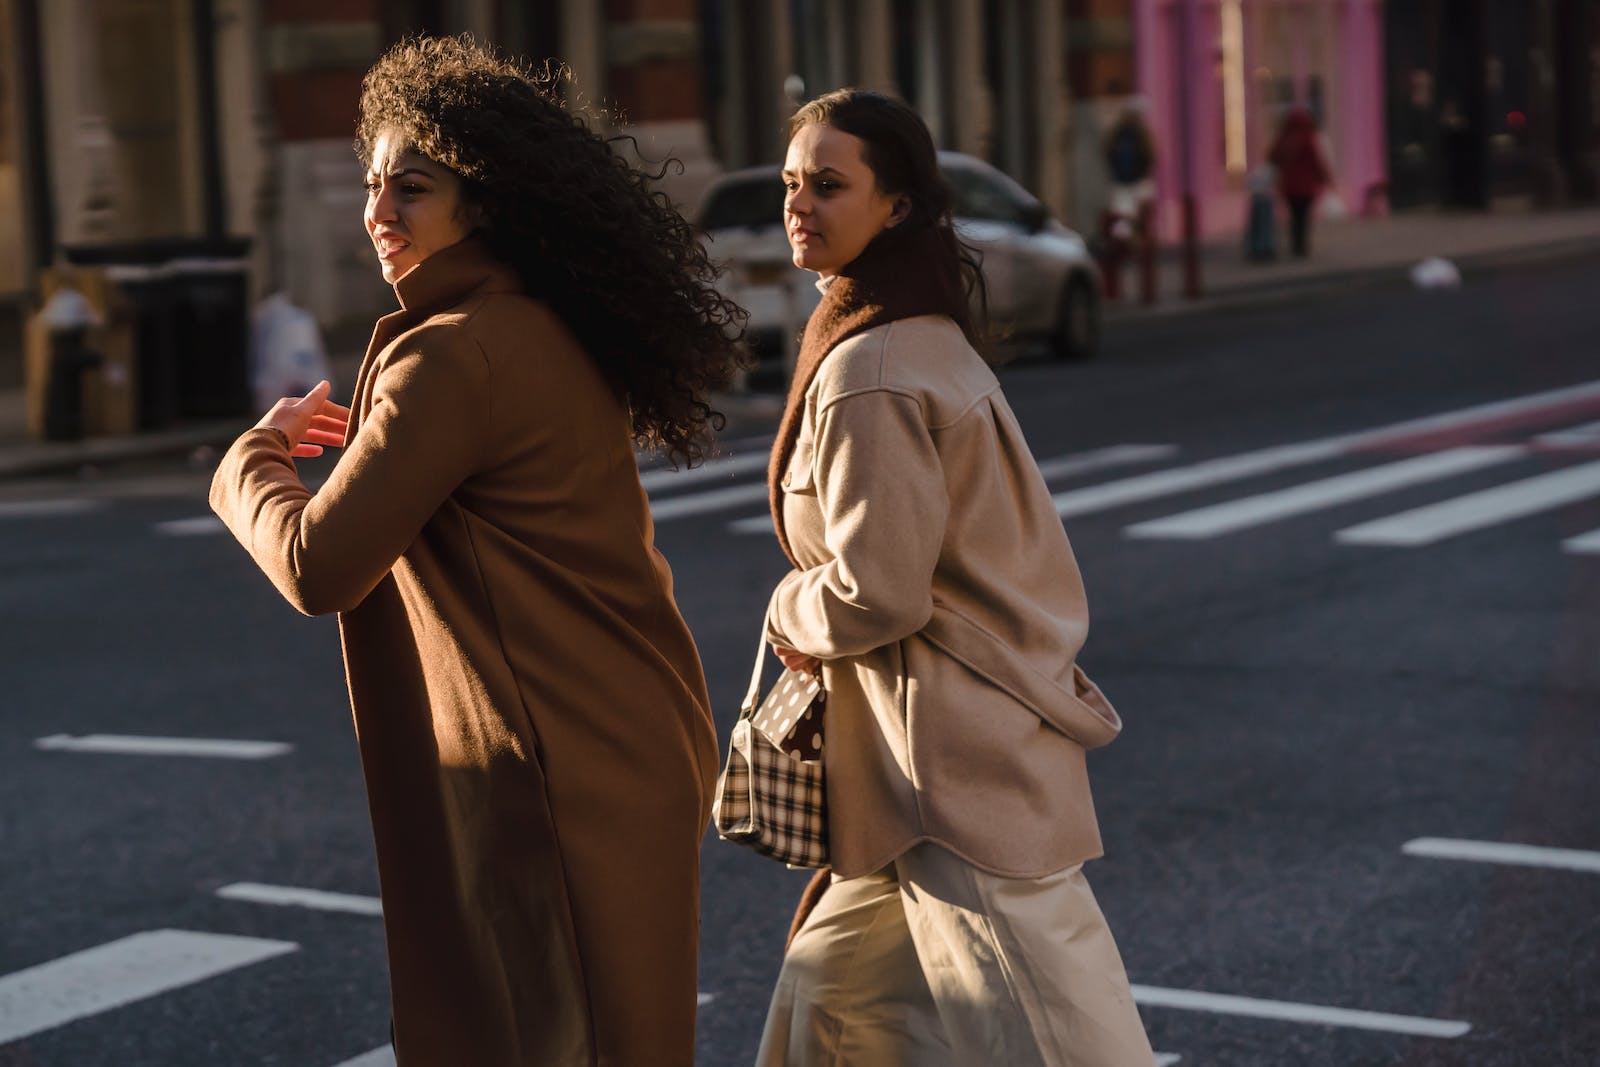 Stylish focused friends in fashionable coats walking across asphalt road with crosswalk in daytime